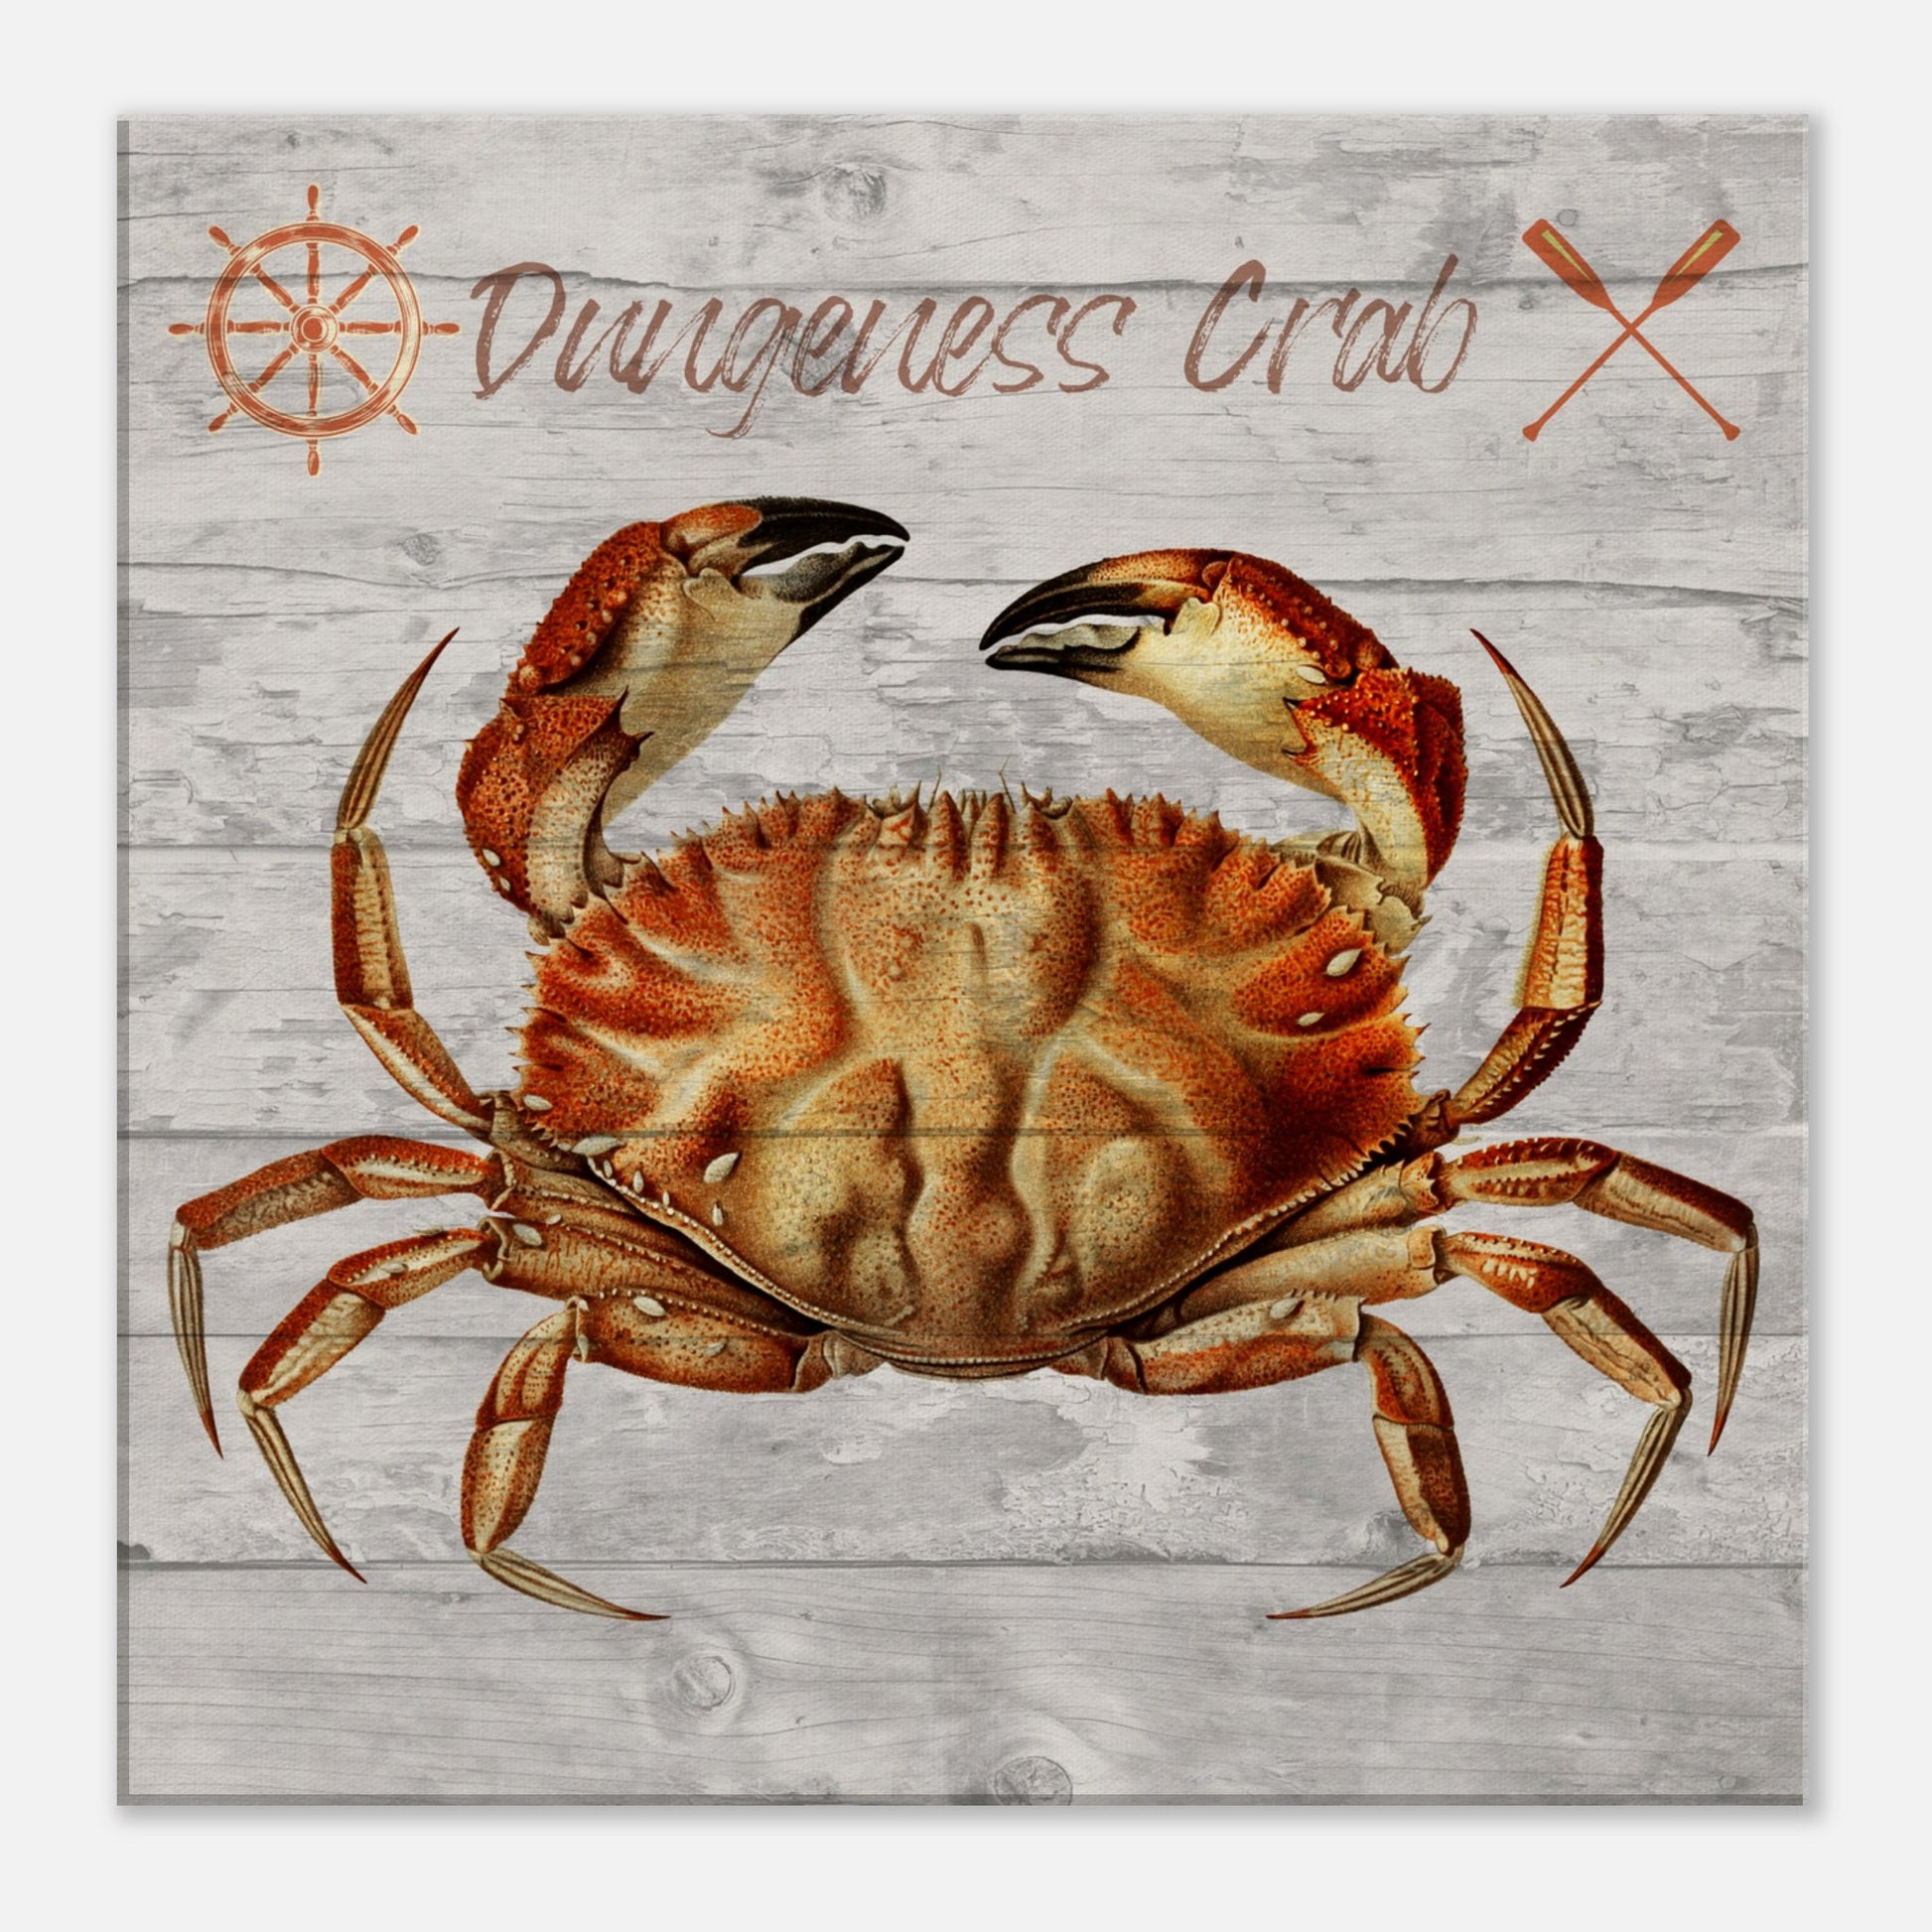 Dungeness Crab Canvas Wall Print at Caribbean Rays